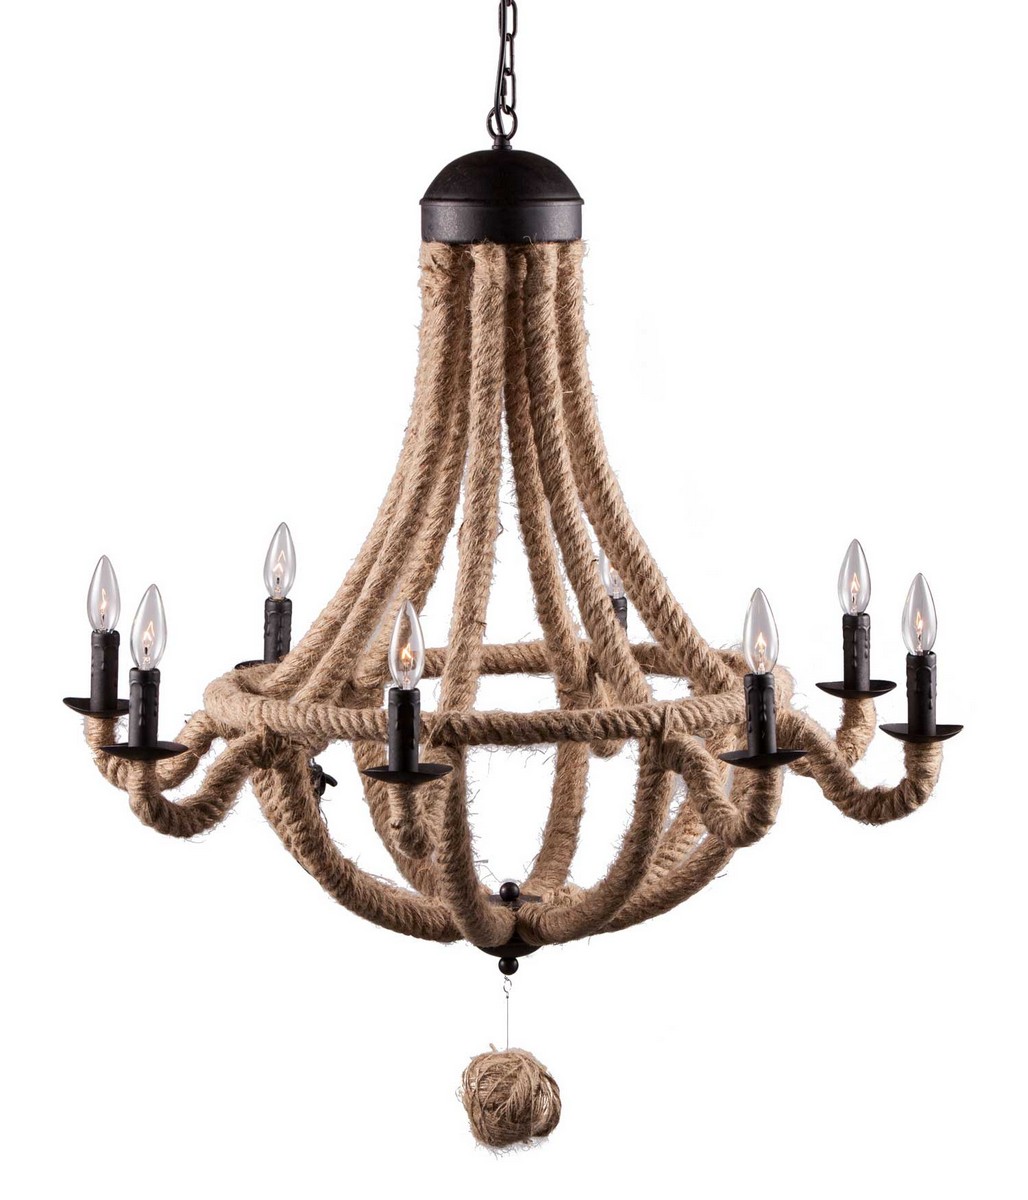 Zuo Modern Celestine Ceiling Lamp - Natural